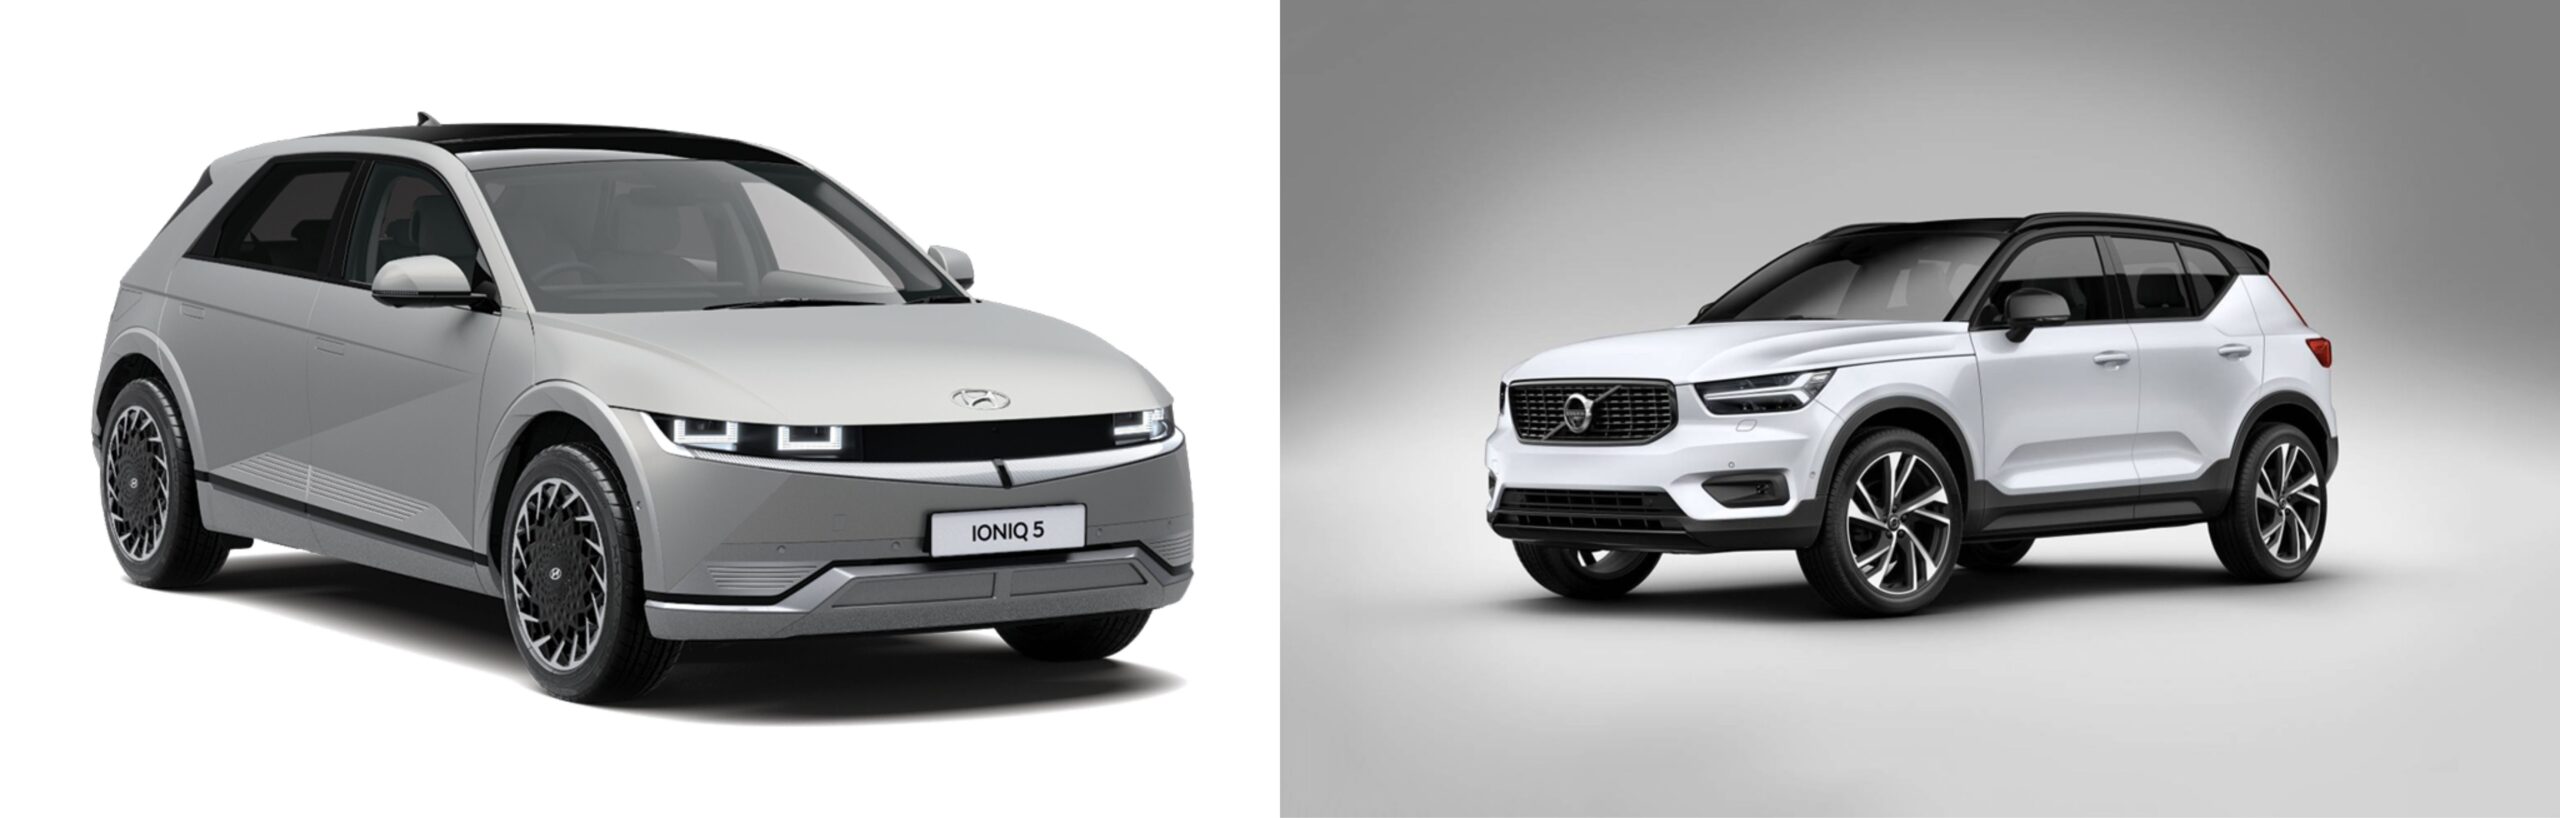 5-Stars for ‘green’ cars Hyundai IONIQ 5 and Volvo XC40 Recharge